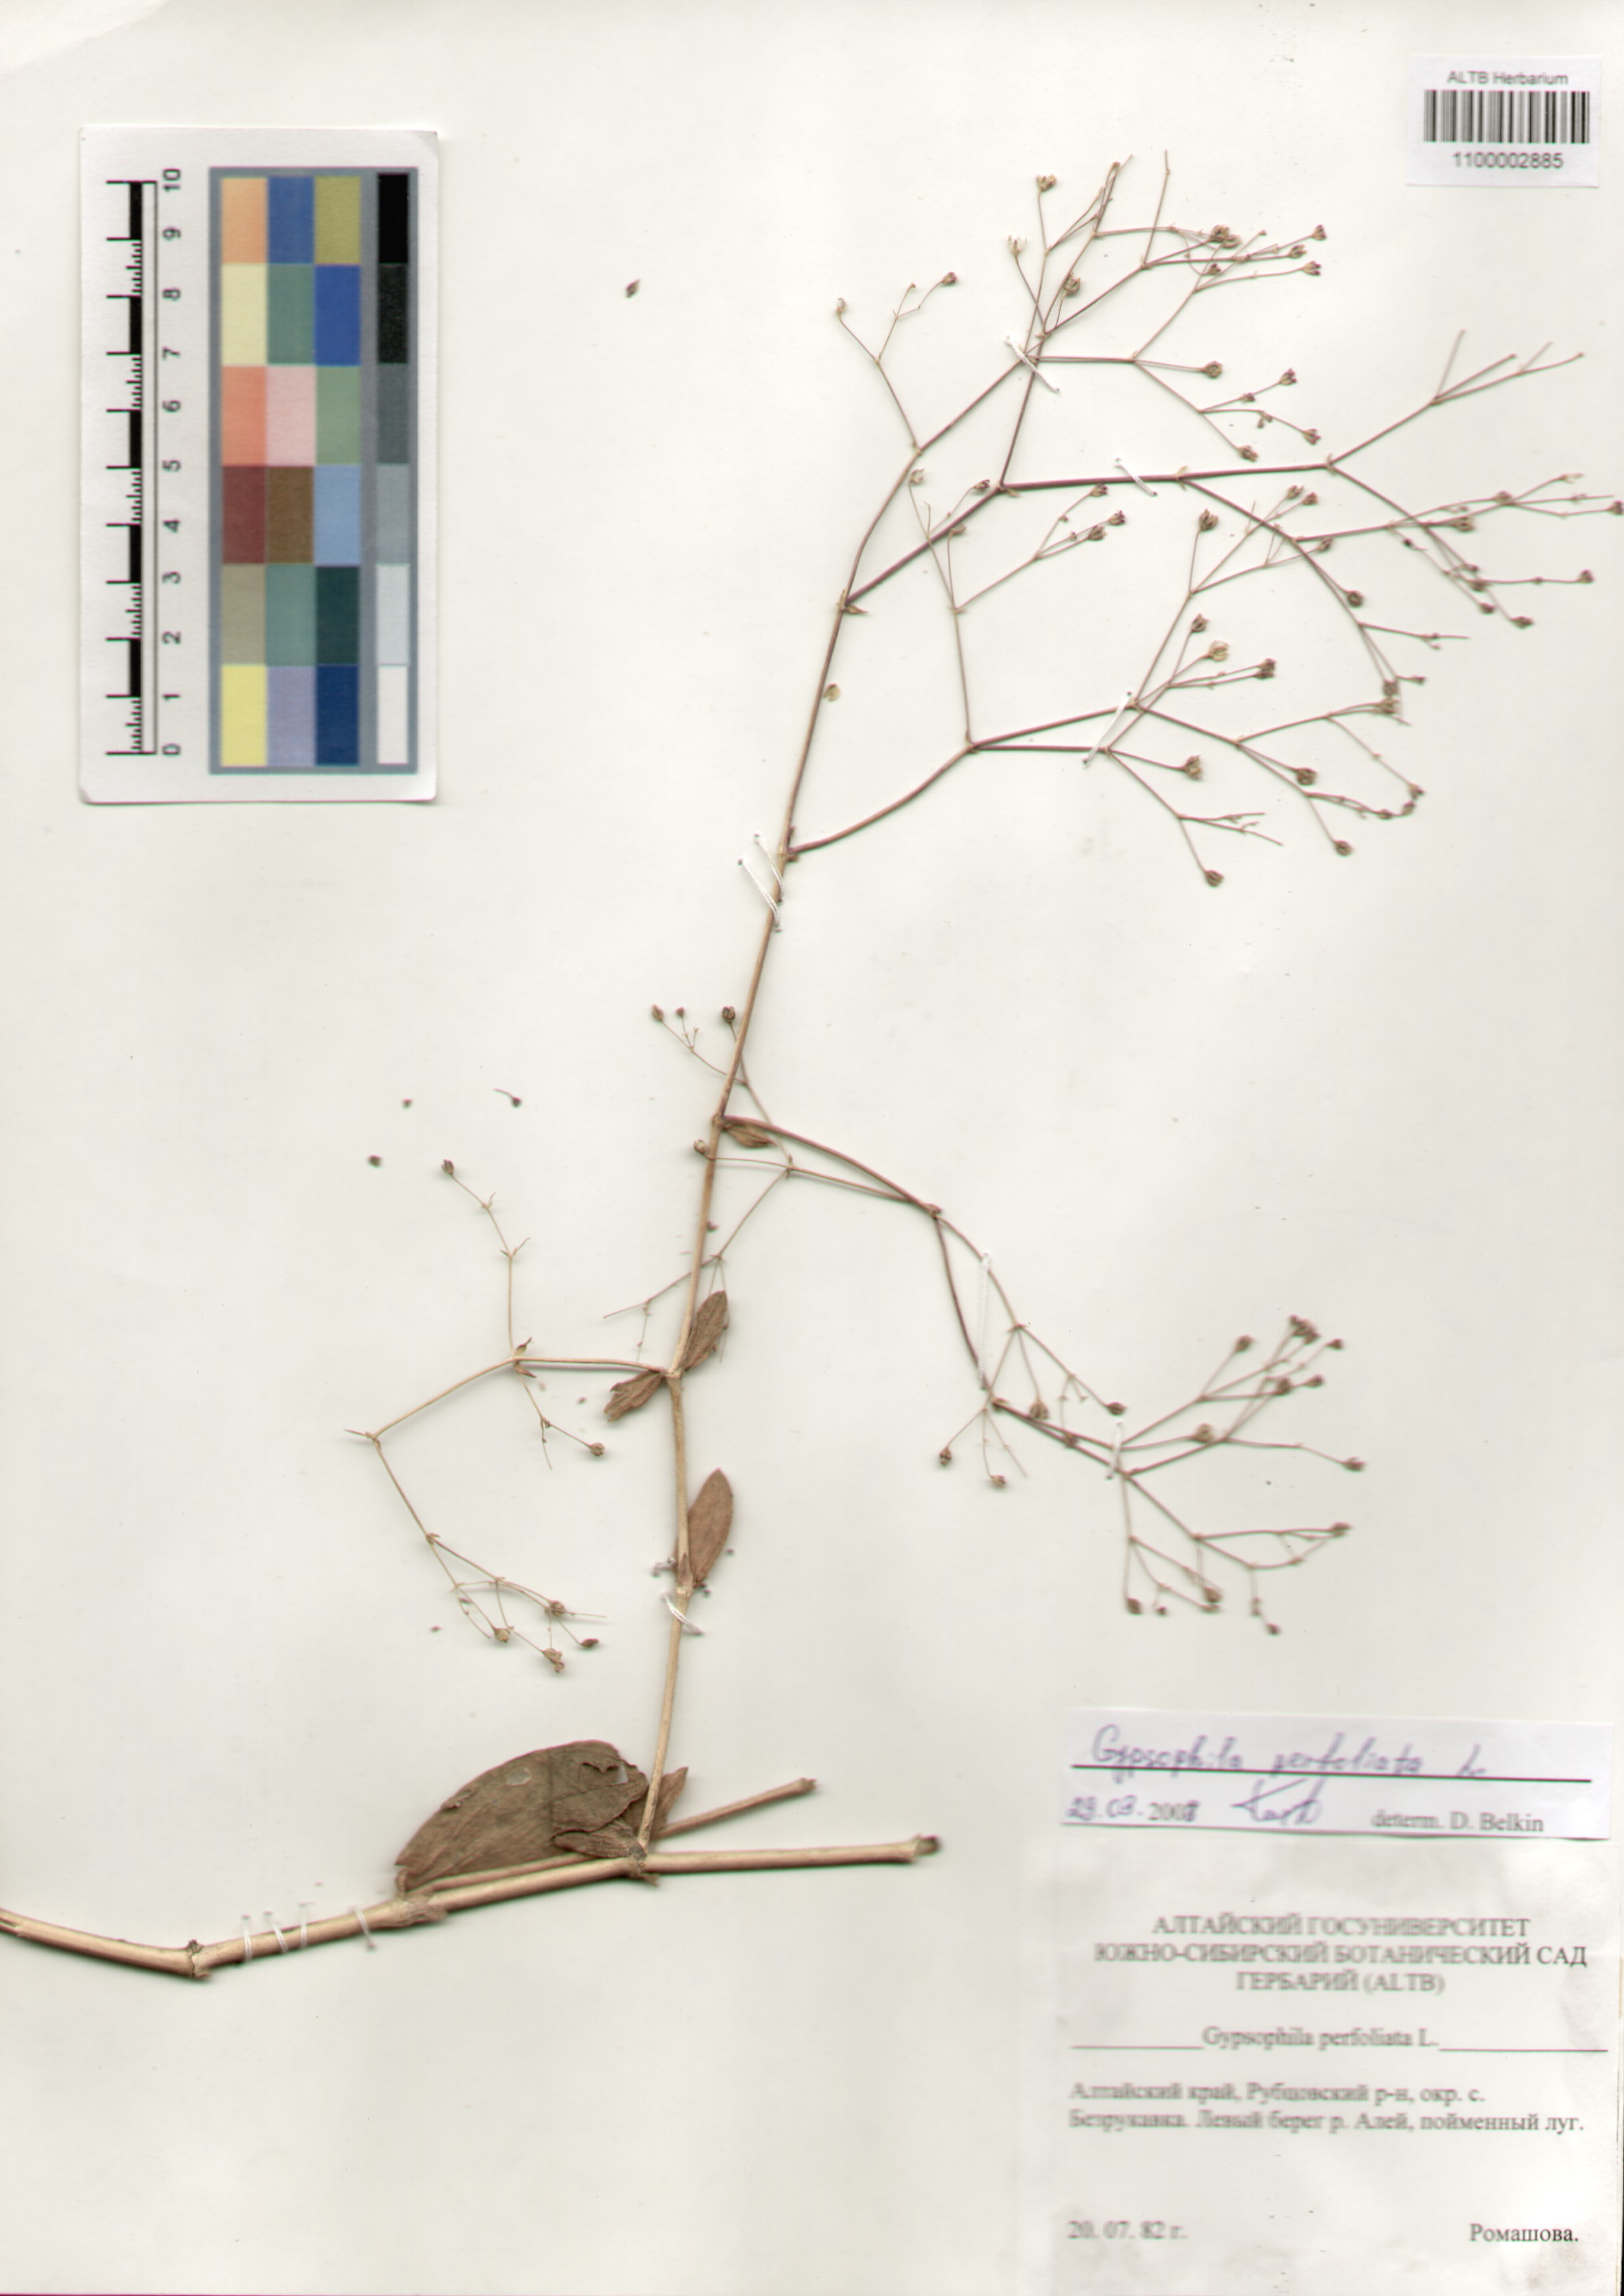 Caryophyllaceae,Gypsophila perfoliata L.